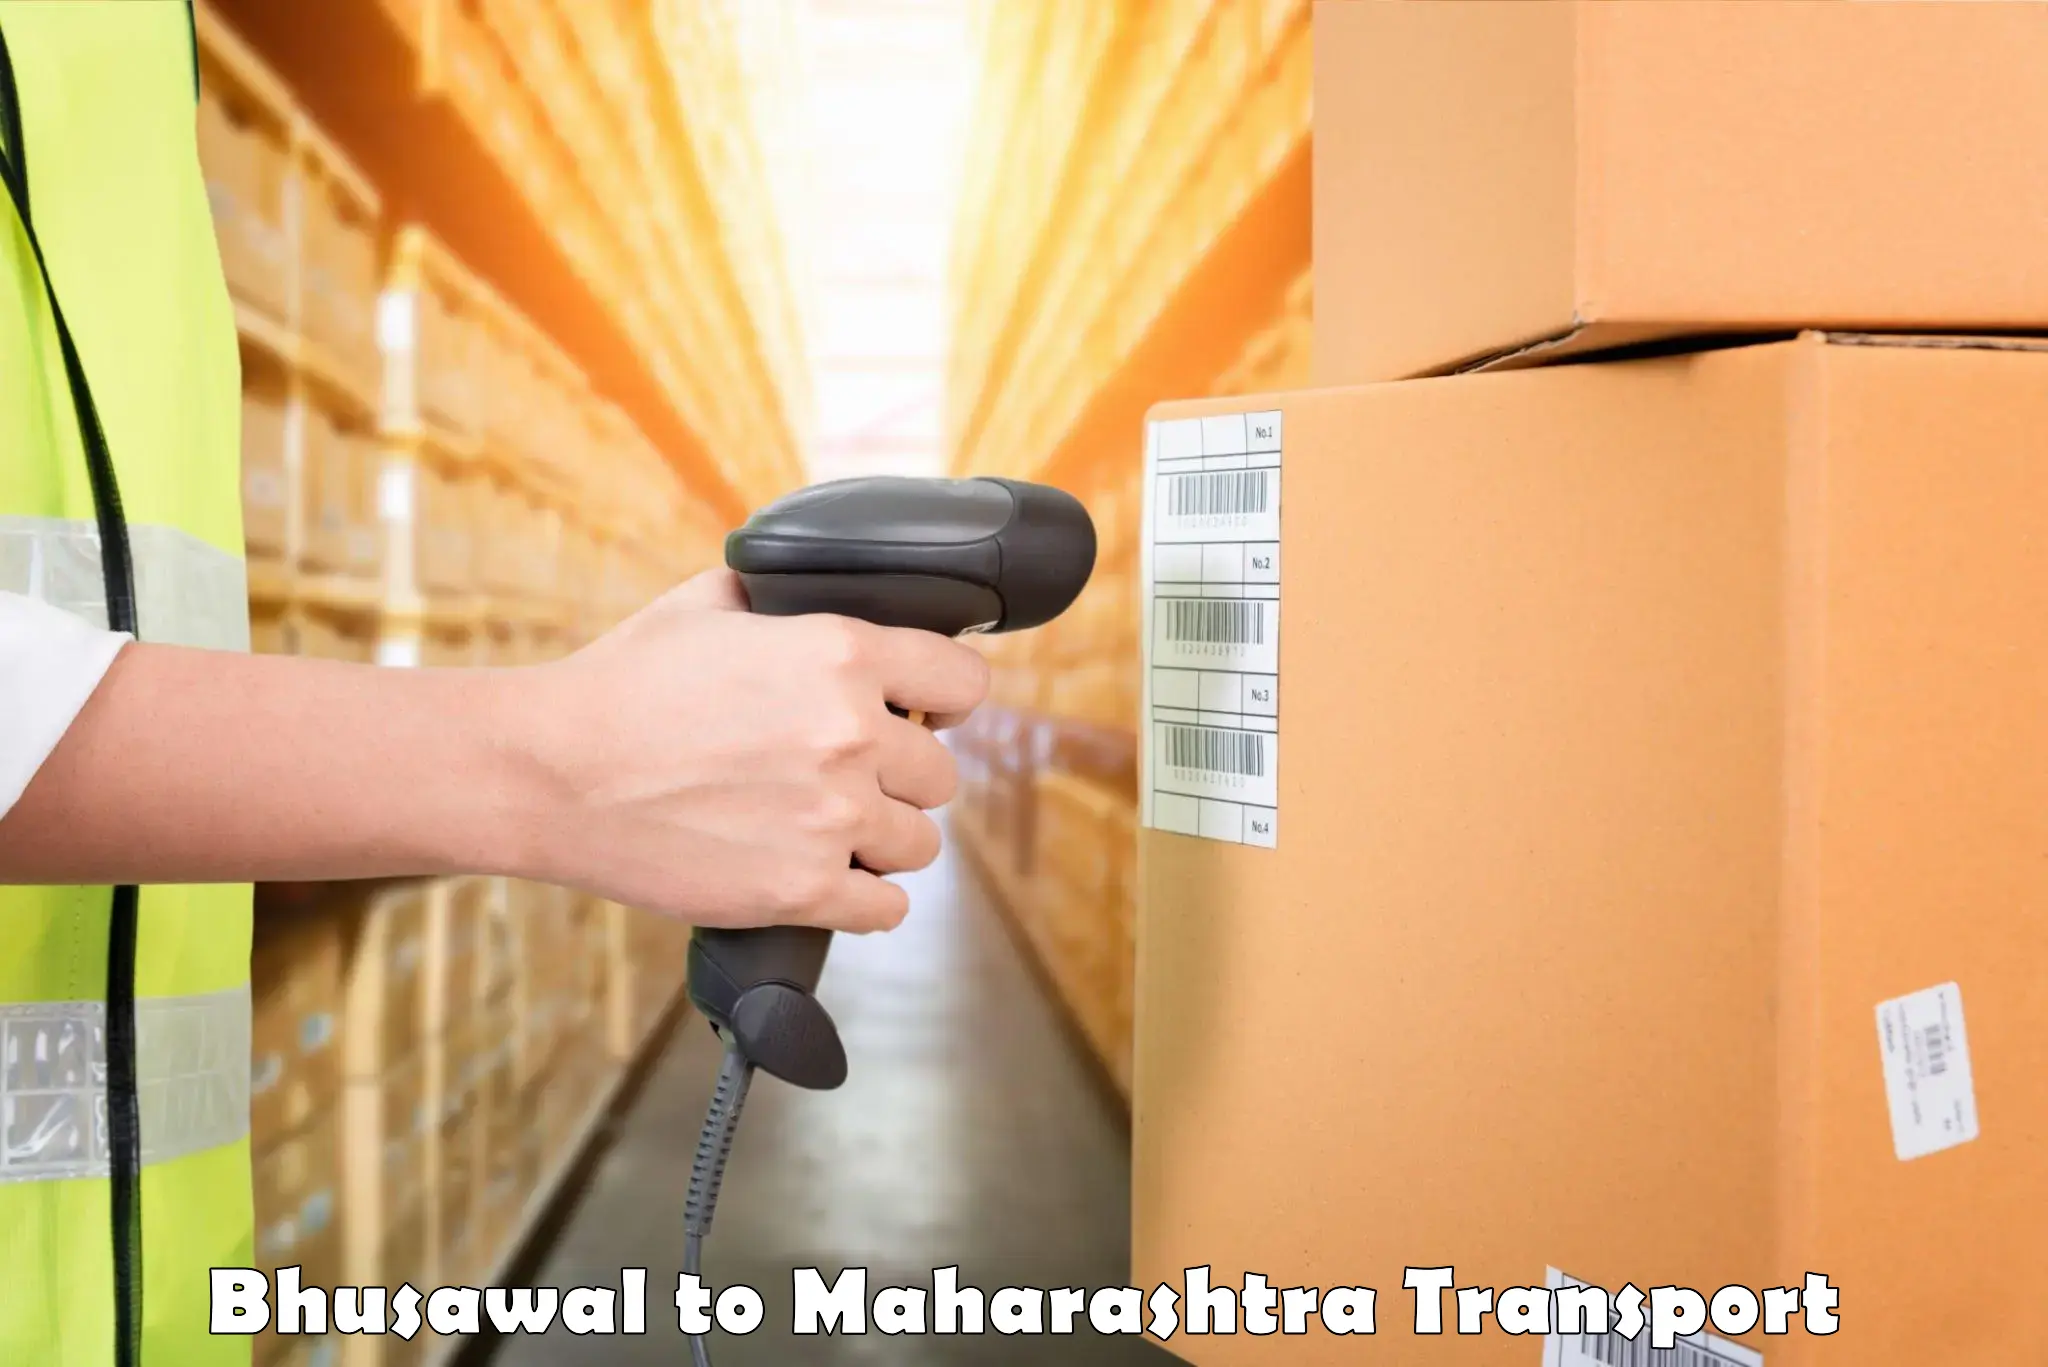 Truck transport companies in India Bhusawal to IIT Mumbai